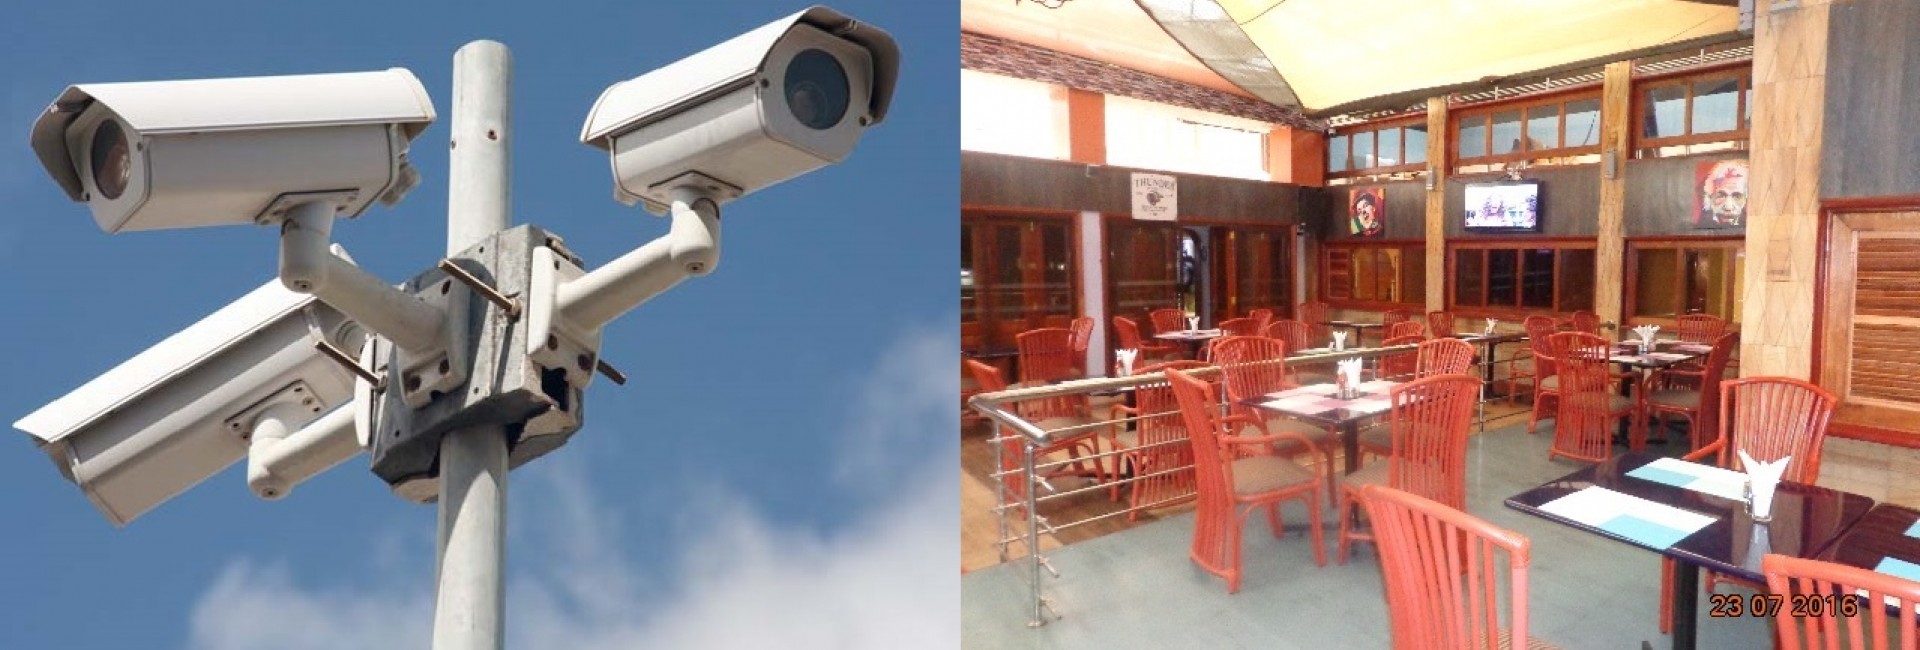 CCTV Installation and Monitoring